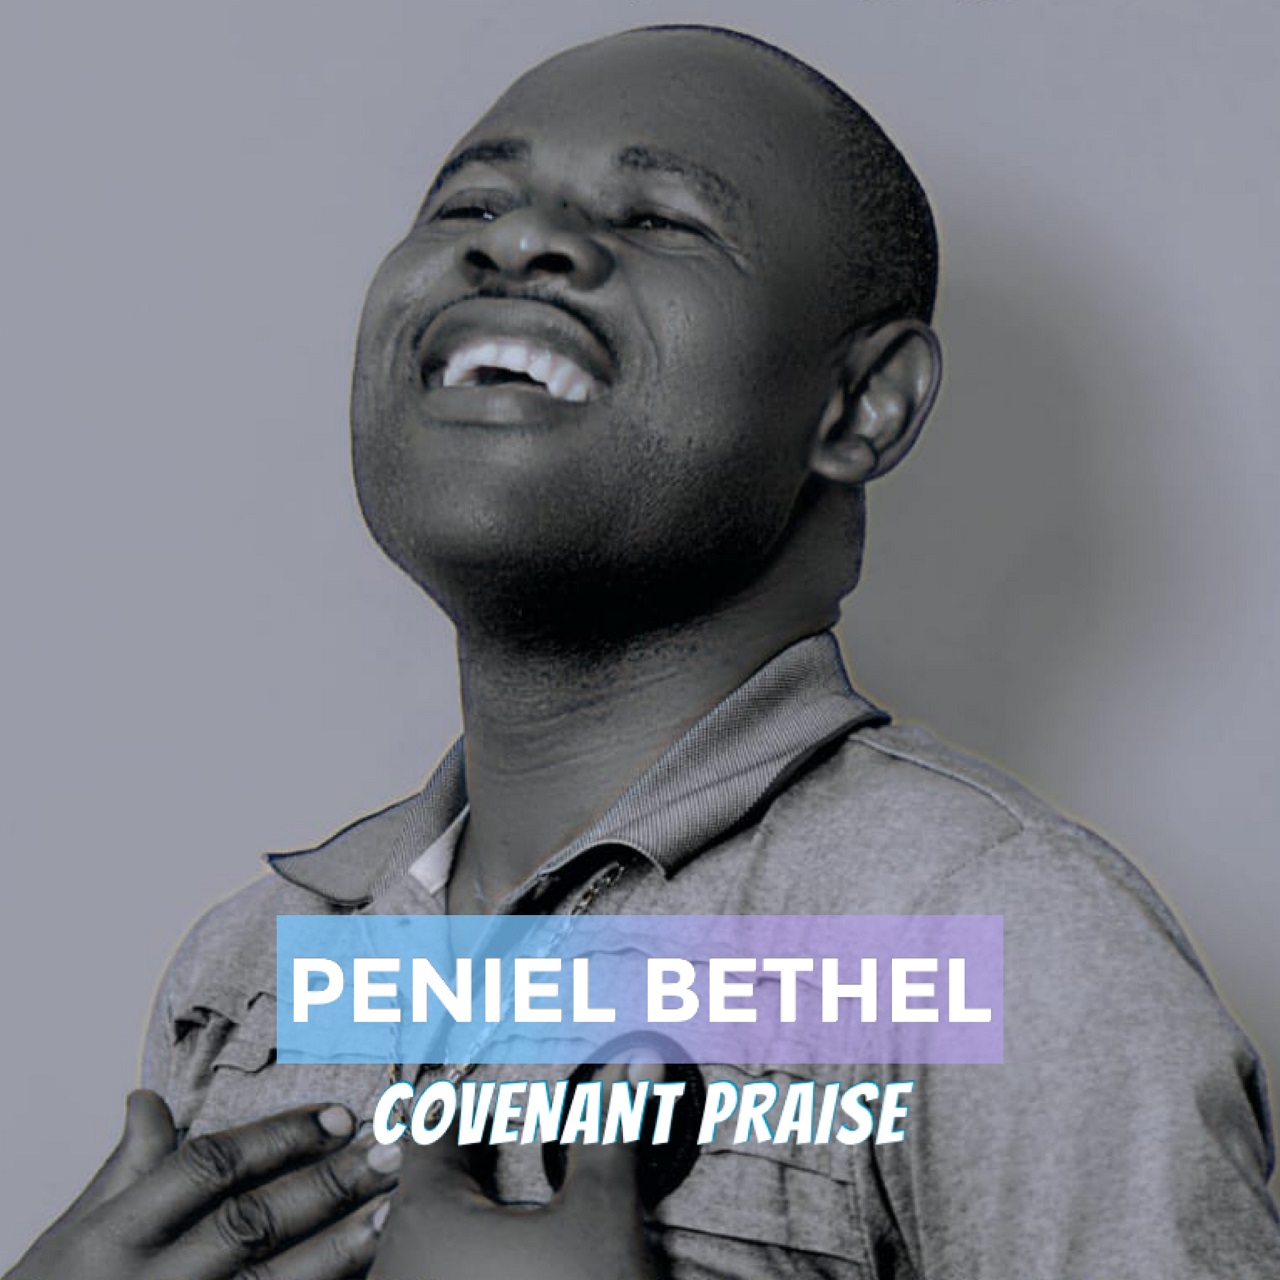 Peniel-bethel-Covenant-Praise